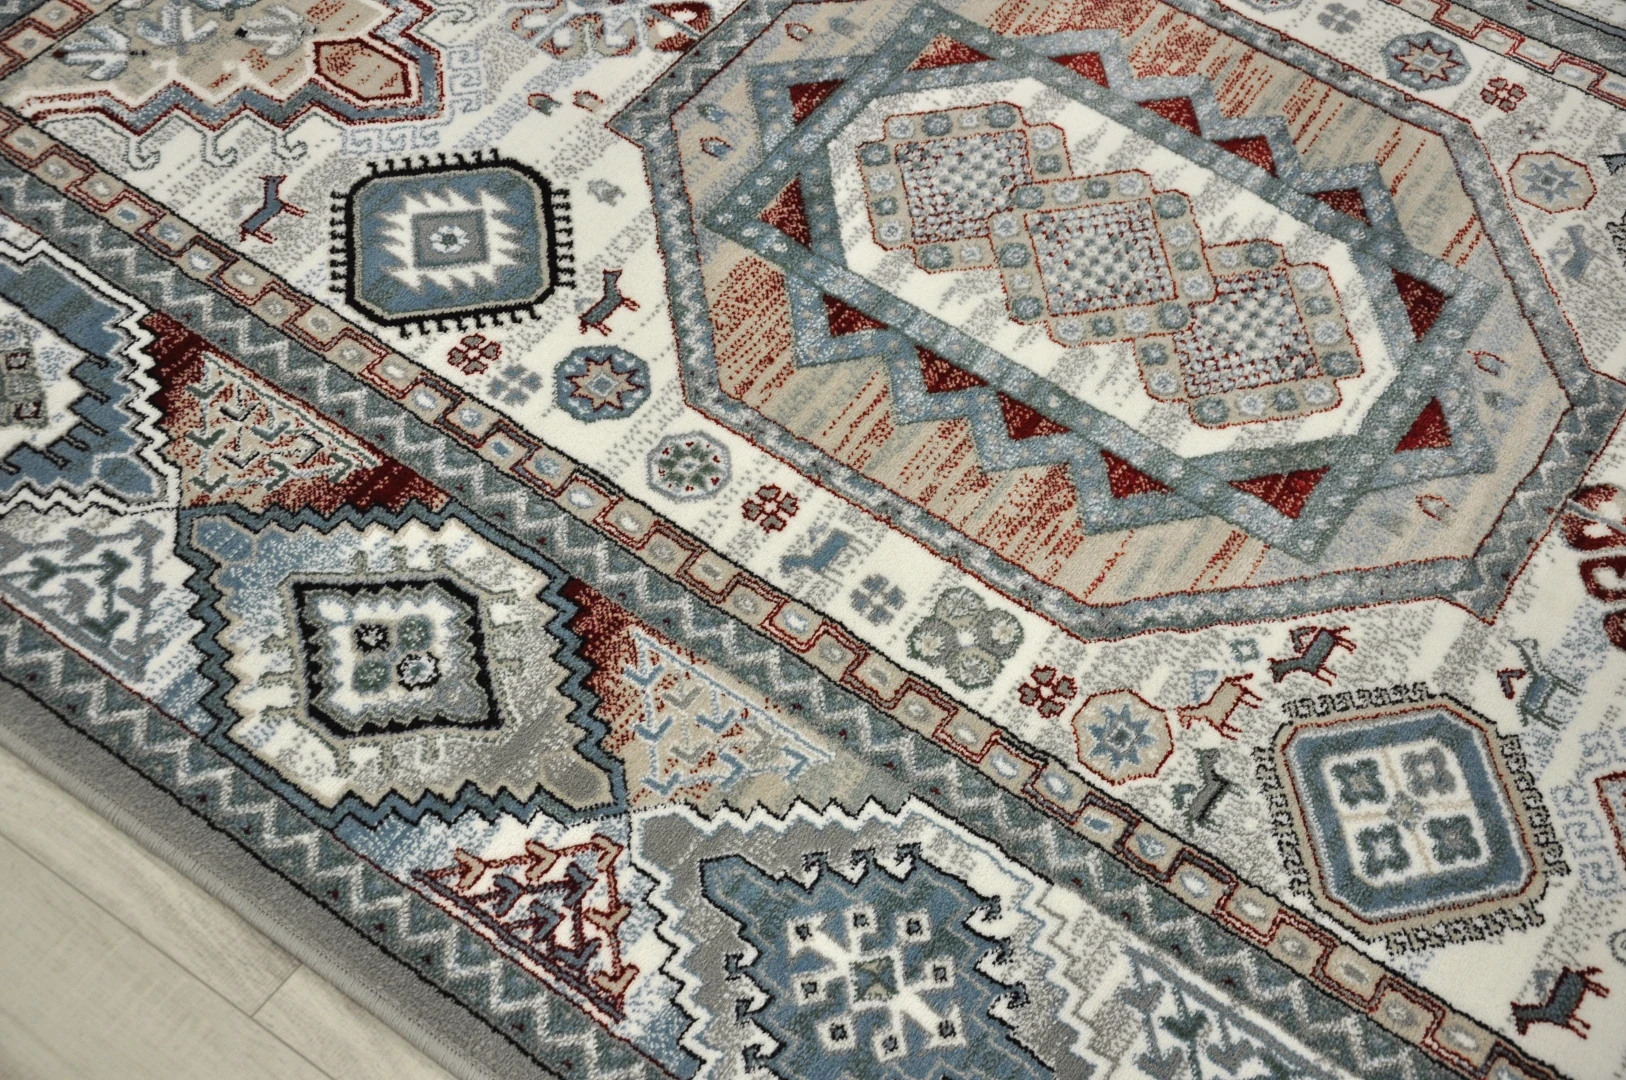 Kusový koberec Trato blue